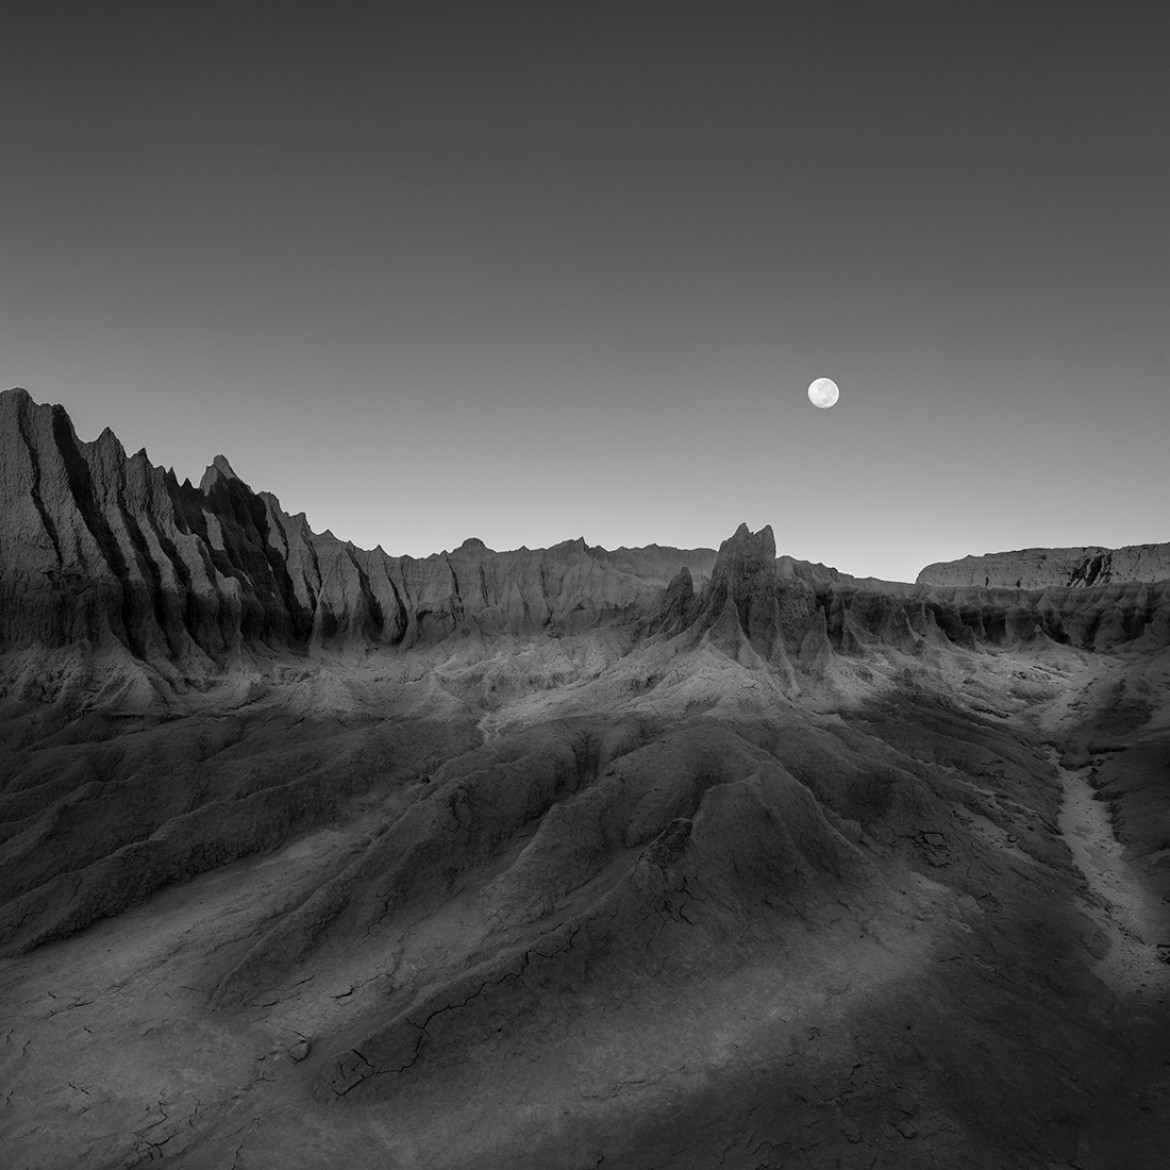 fot. Federico Rekowski, "Moon at Mungo", 3. miejsce w kategorii Landscapes